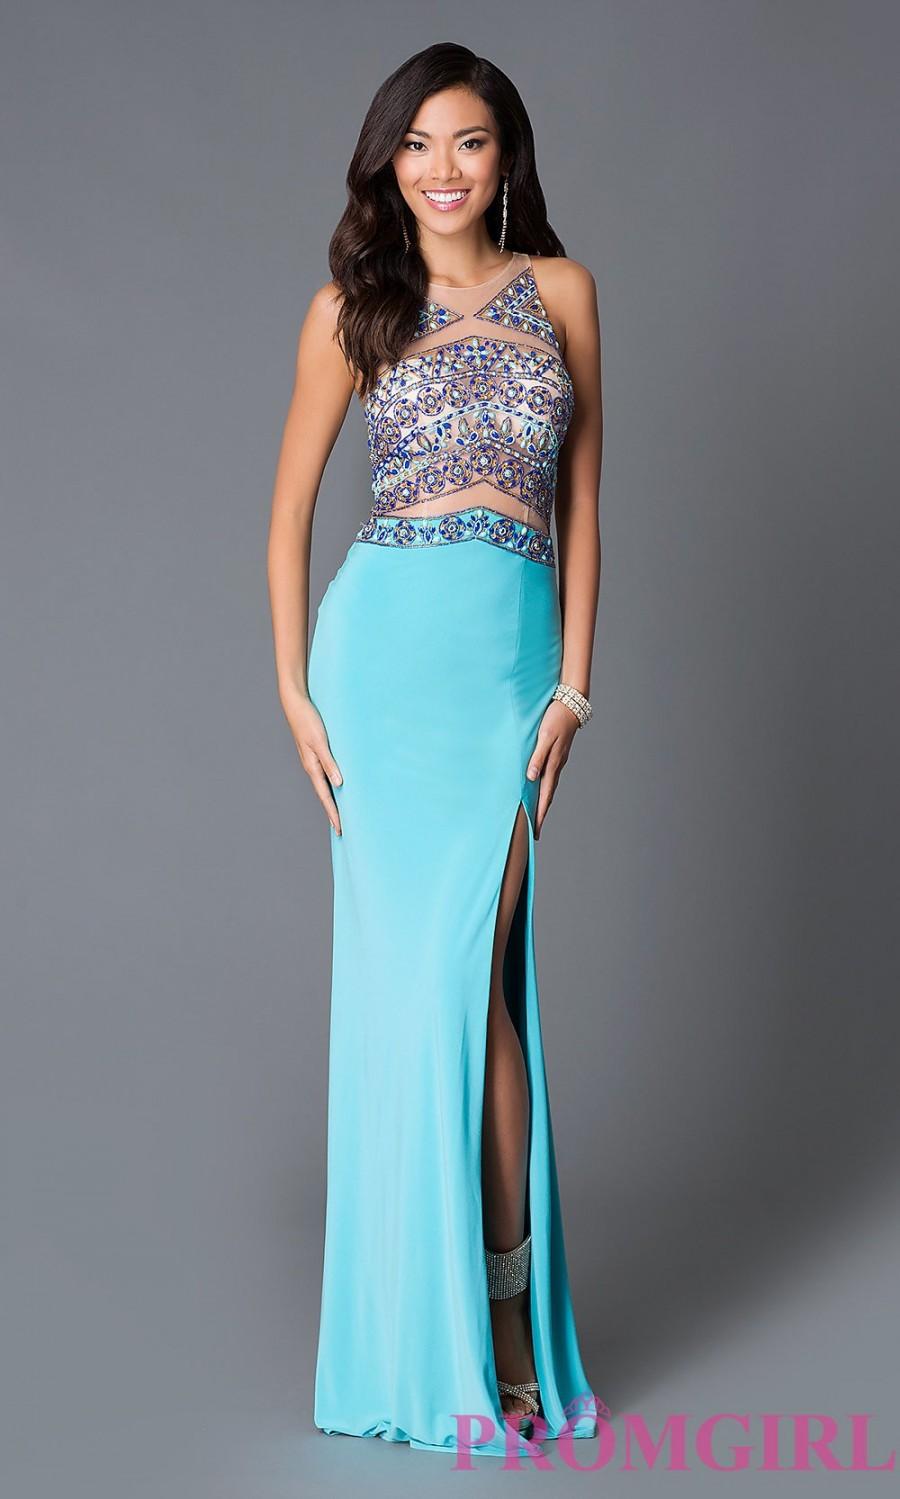 Hochzeit - Sleeveless Aqua Blue Jersey Prom Dress from JVN by Jovani - Discount Evening Dresses 